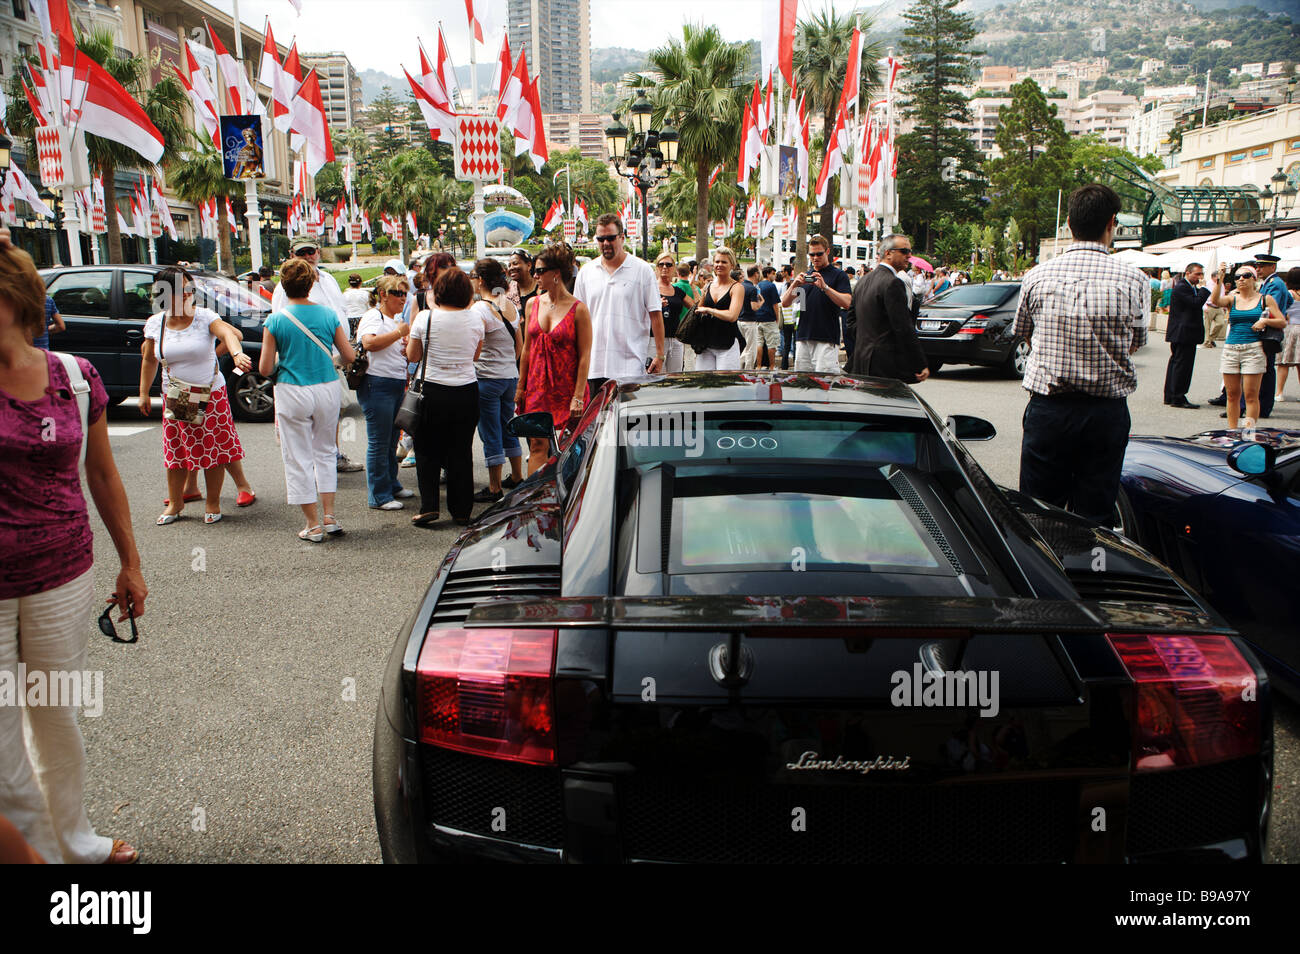 The rear of a black Lamborghini parked outside the Casino de Paris in Monaco Monte Carlo with tourists walking around. Stock Photo